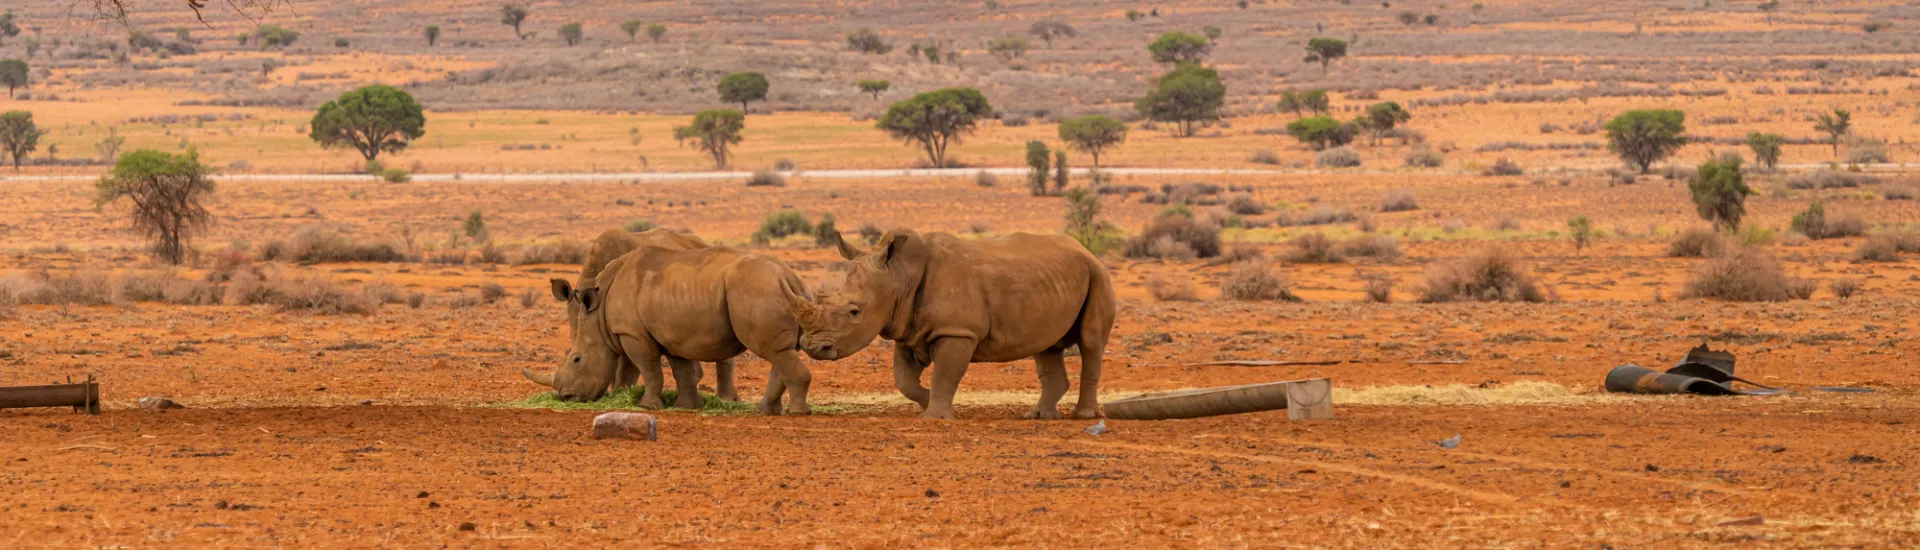 Savanna sands and rhinos